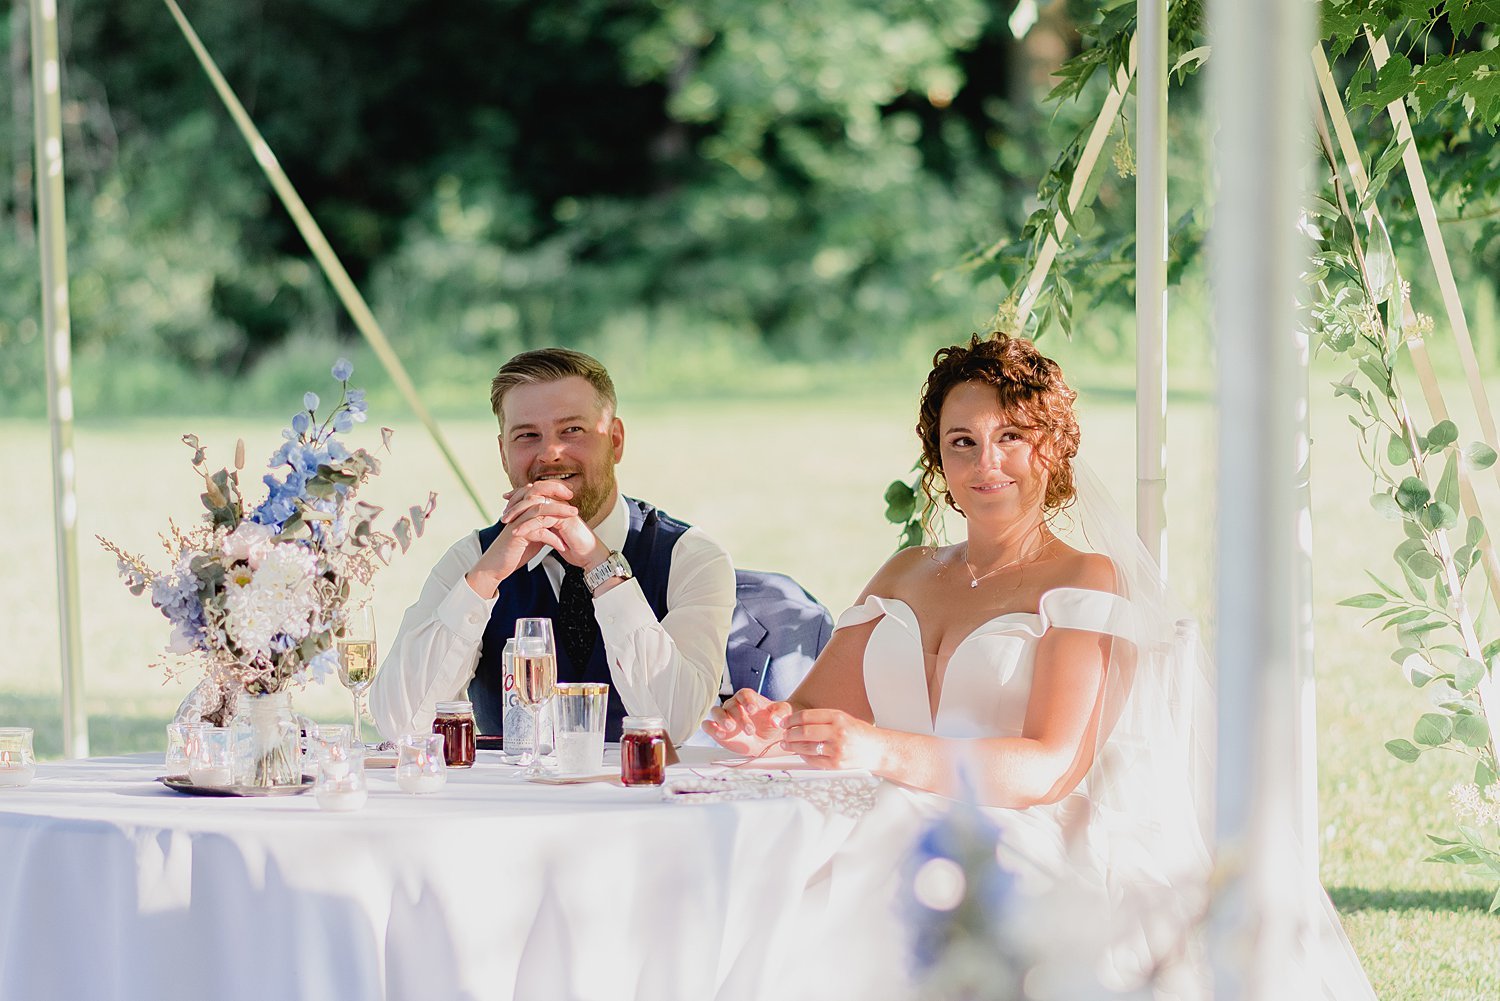 Elegant Summer Backyard Tented Wedding in Sydenham, Ontario | Prince Edward County Wedding Photographer | Holly McMurter Photographs_0081.jpg